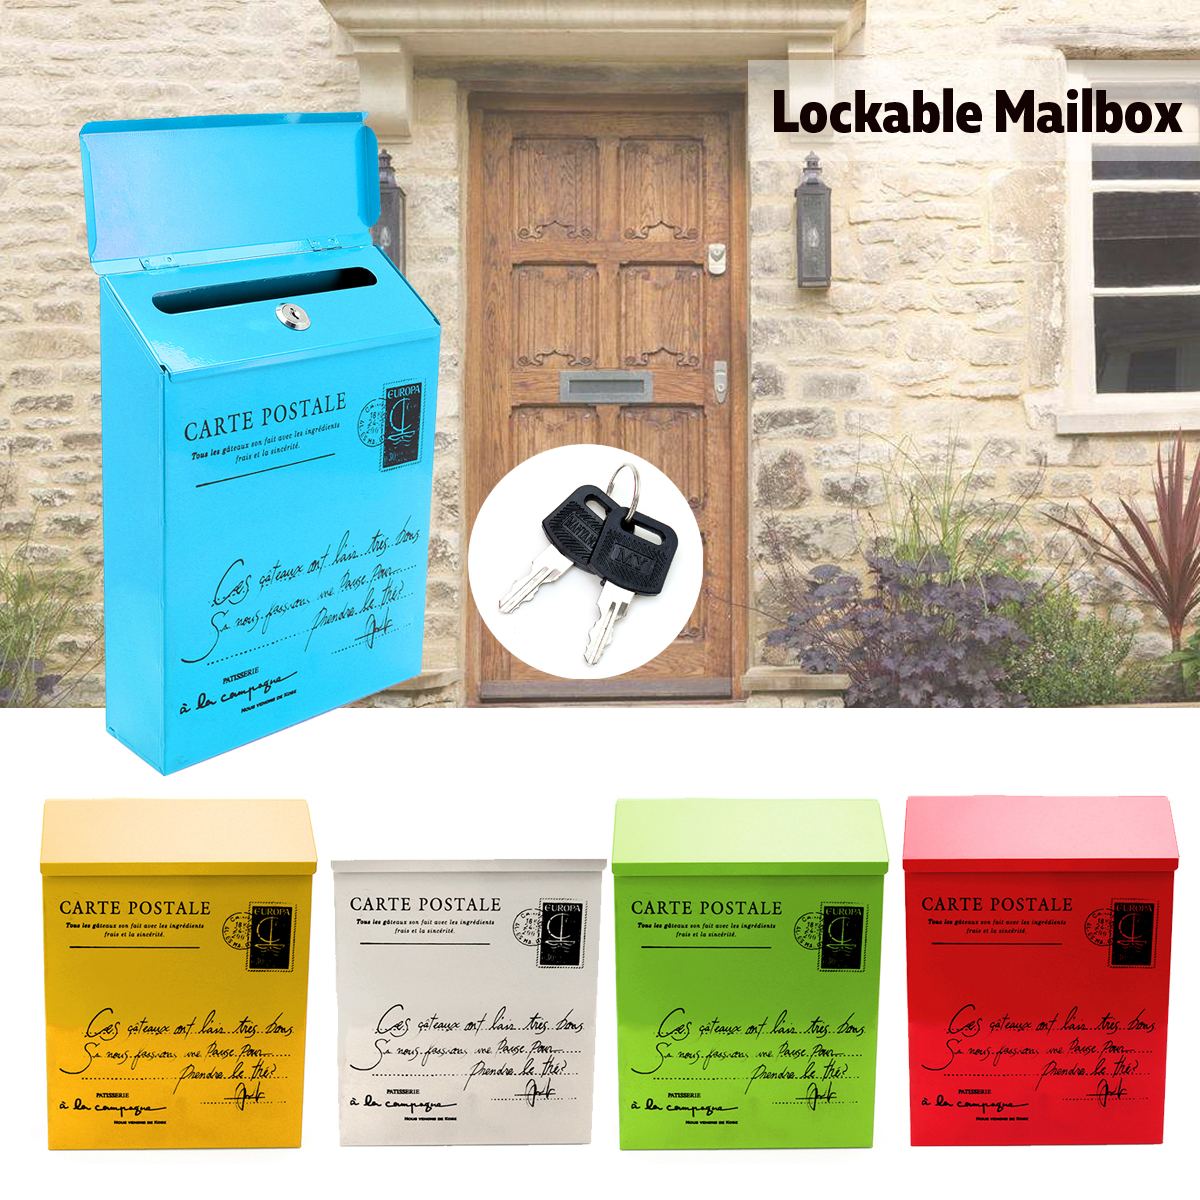 Waterproof-Outdoor-Metal-Post-Box-Letter-Mailbox-Wall-Mounted-Lockable-2-Keys-Mail-Box-1310033